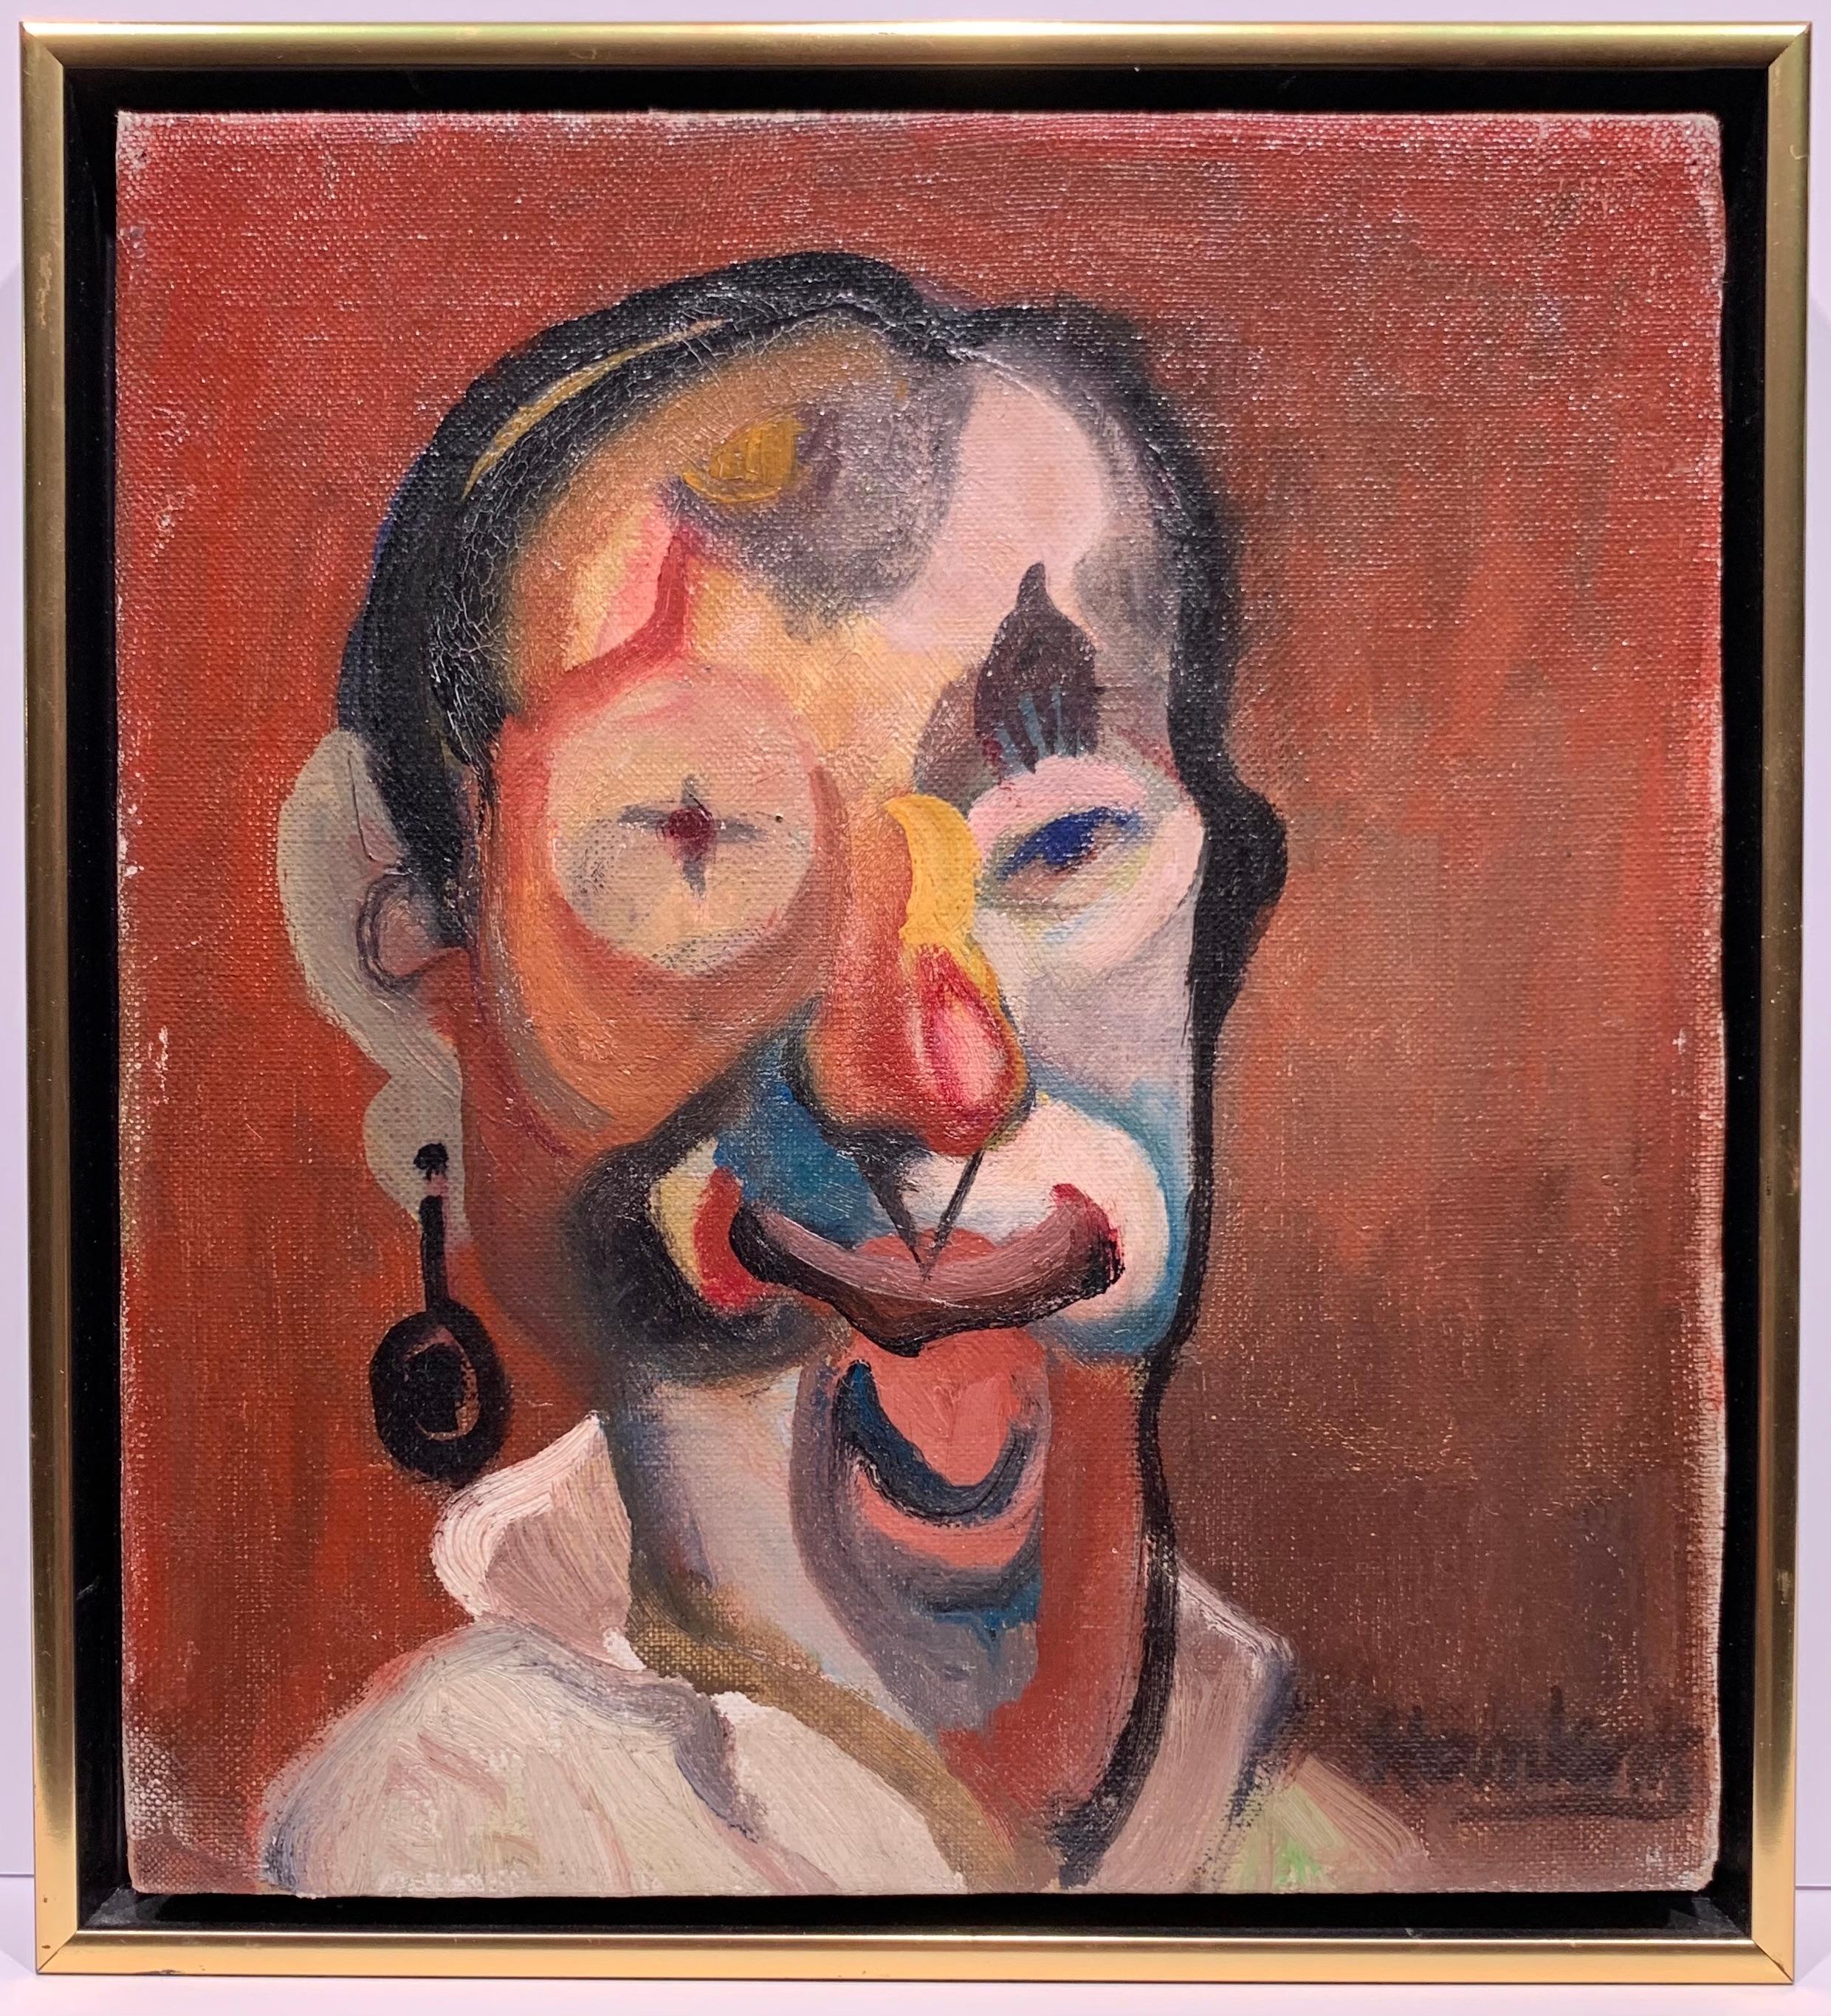 Abraham Hankins Portrait Painting - The Clown (Abstract Portrait) 